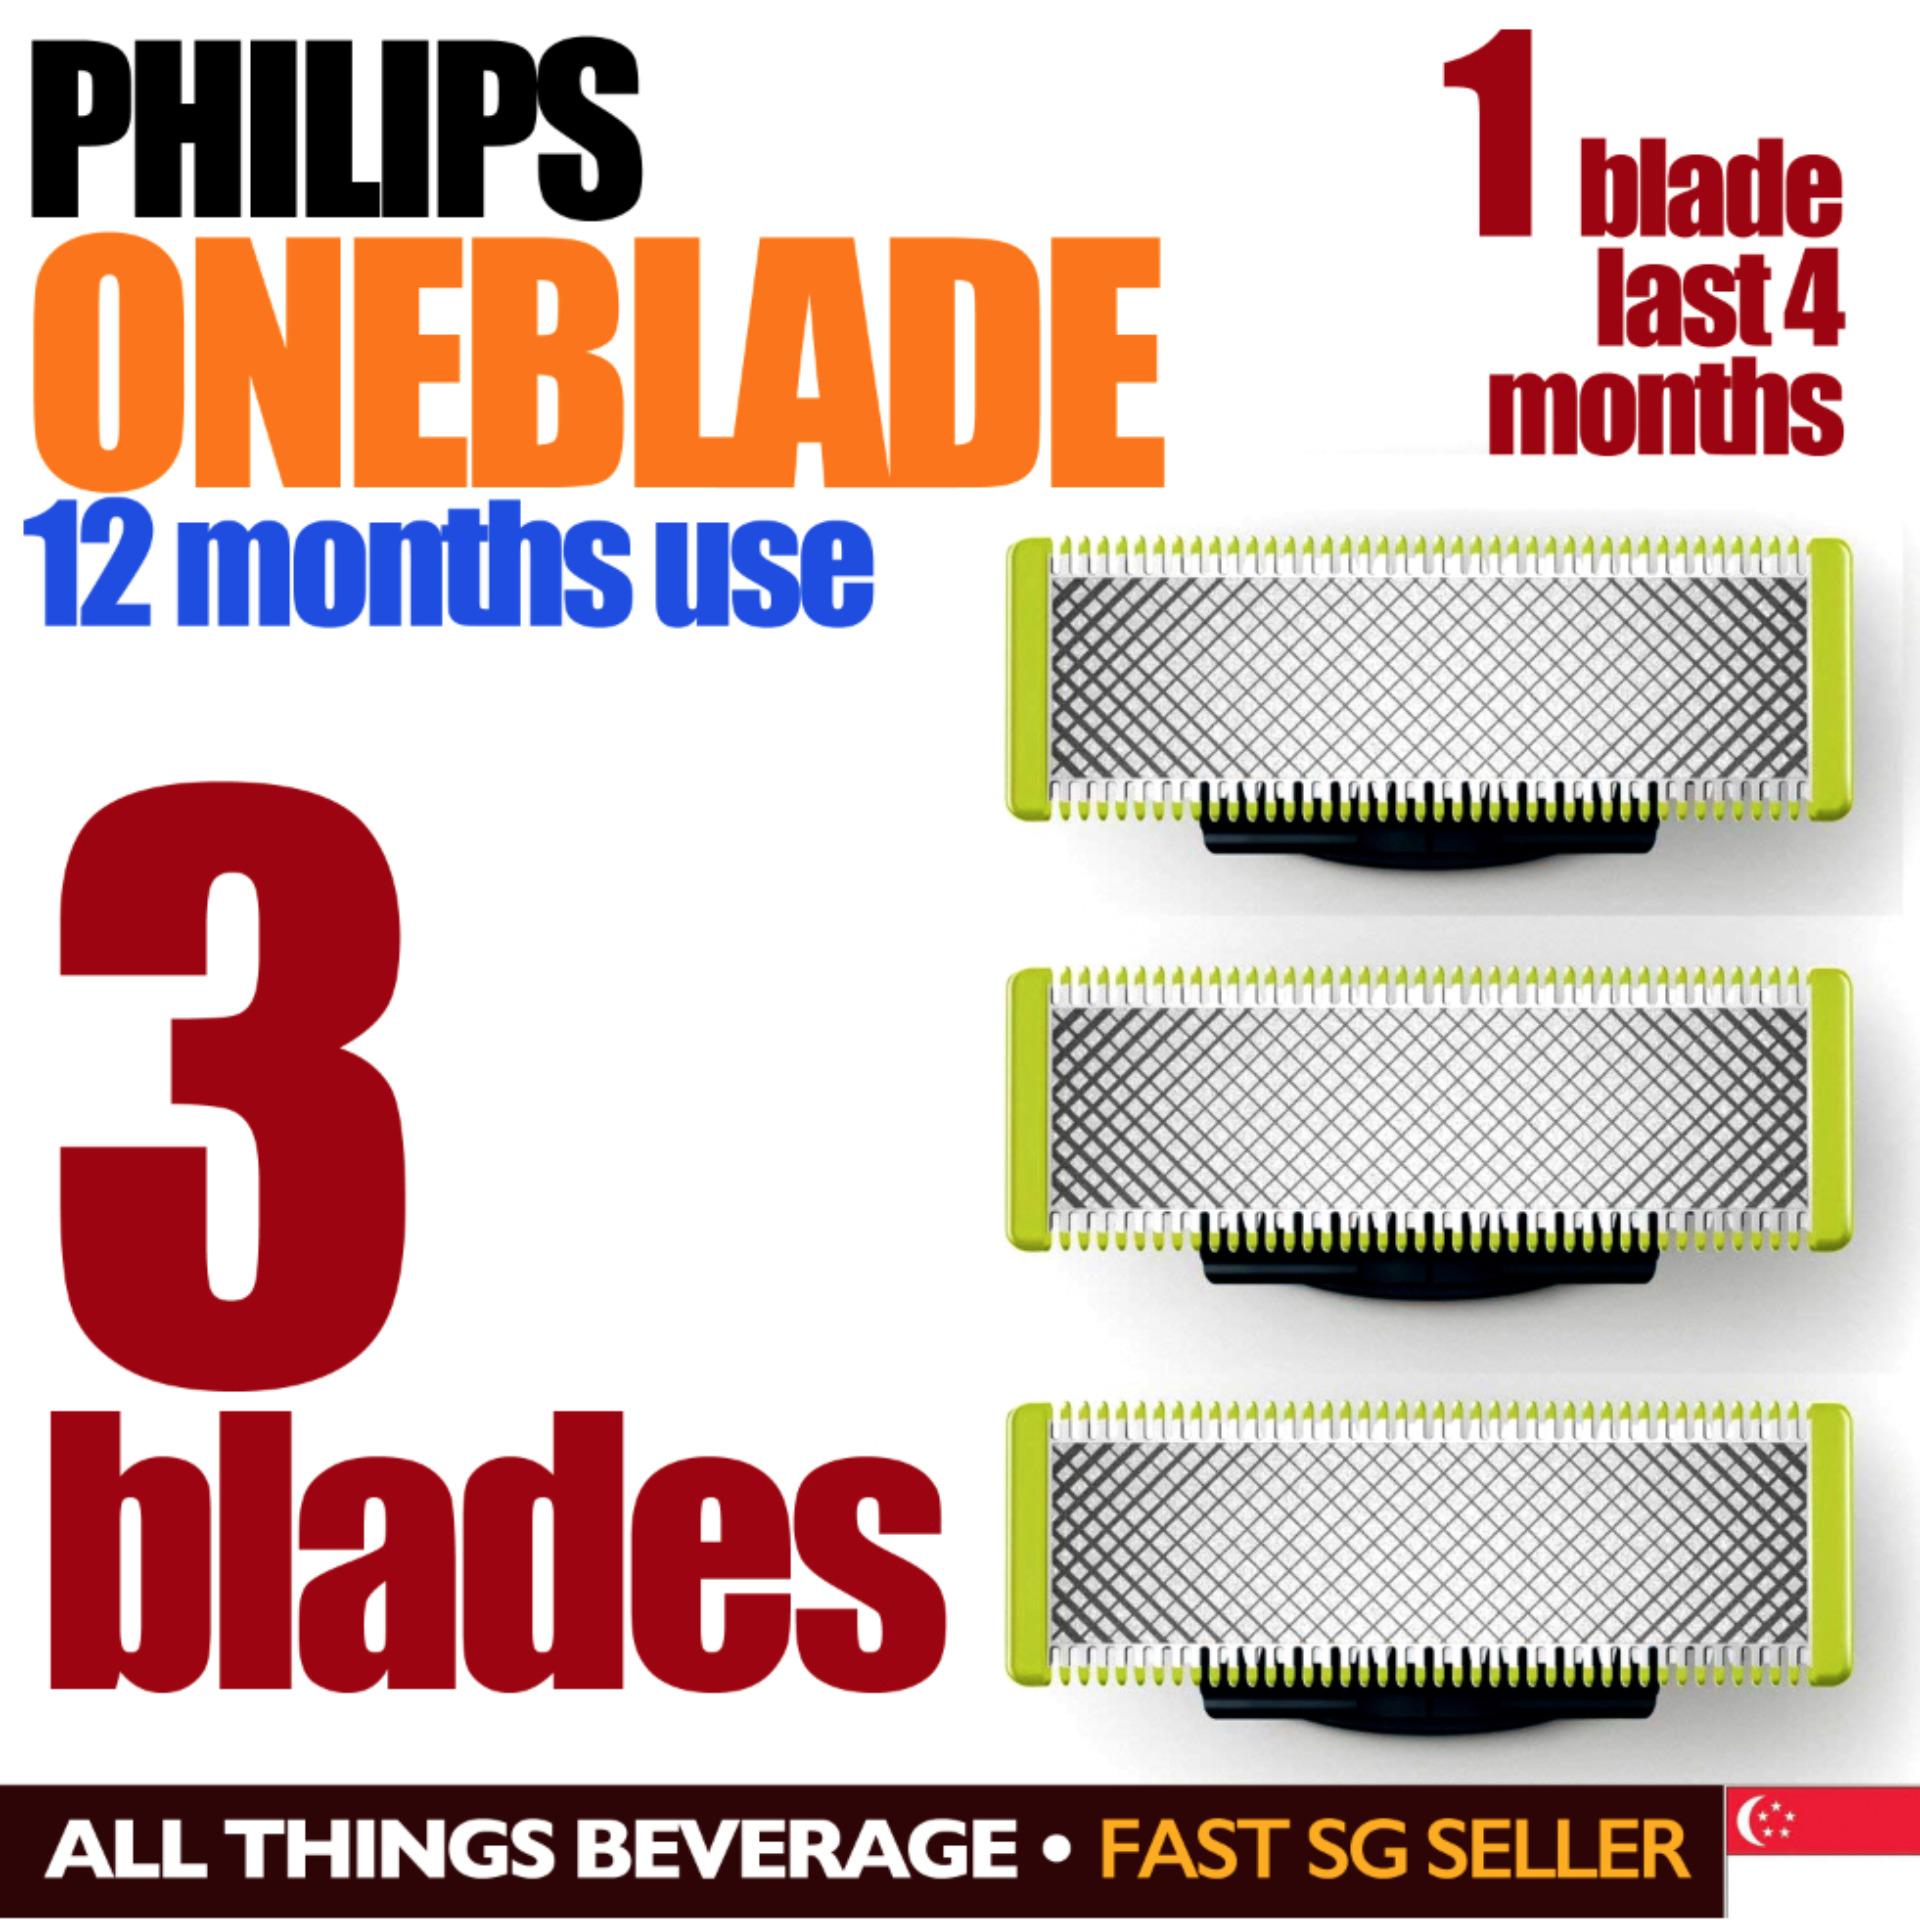 philips one blade online